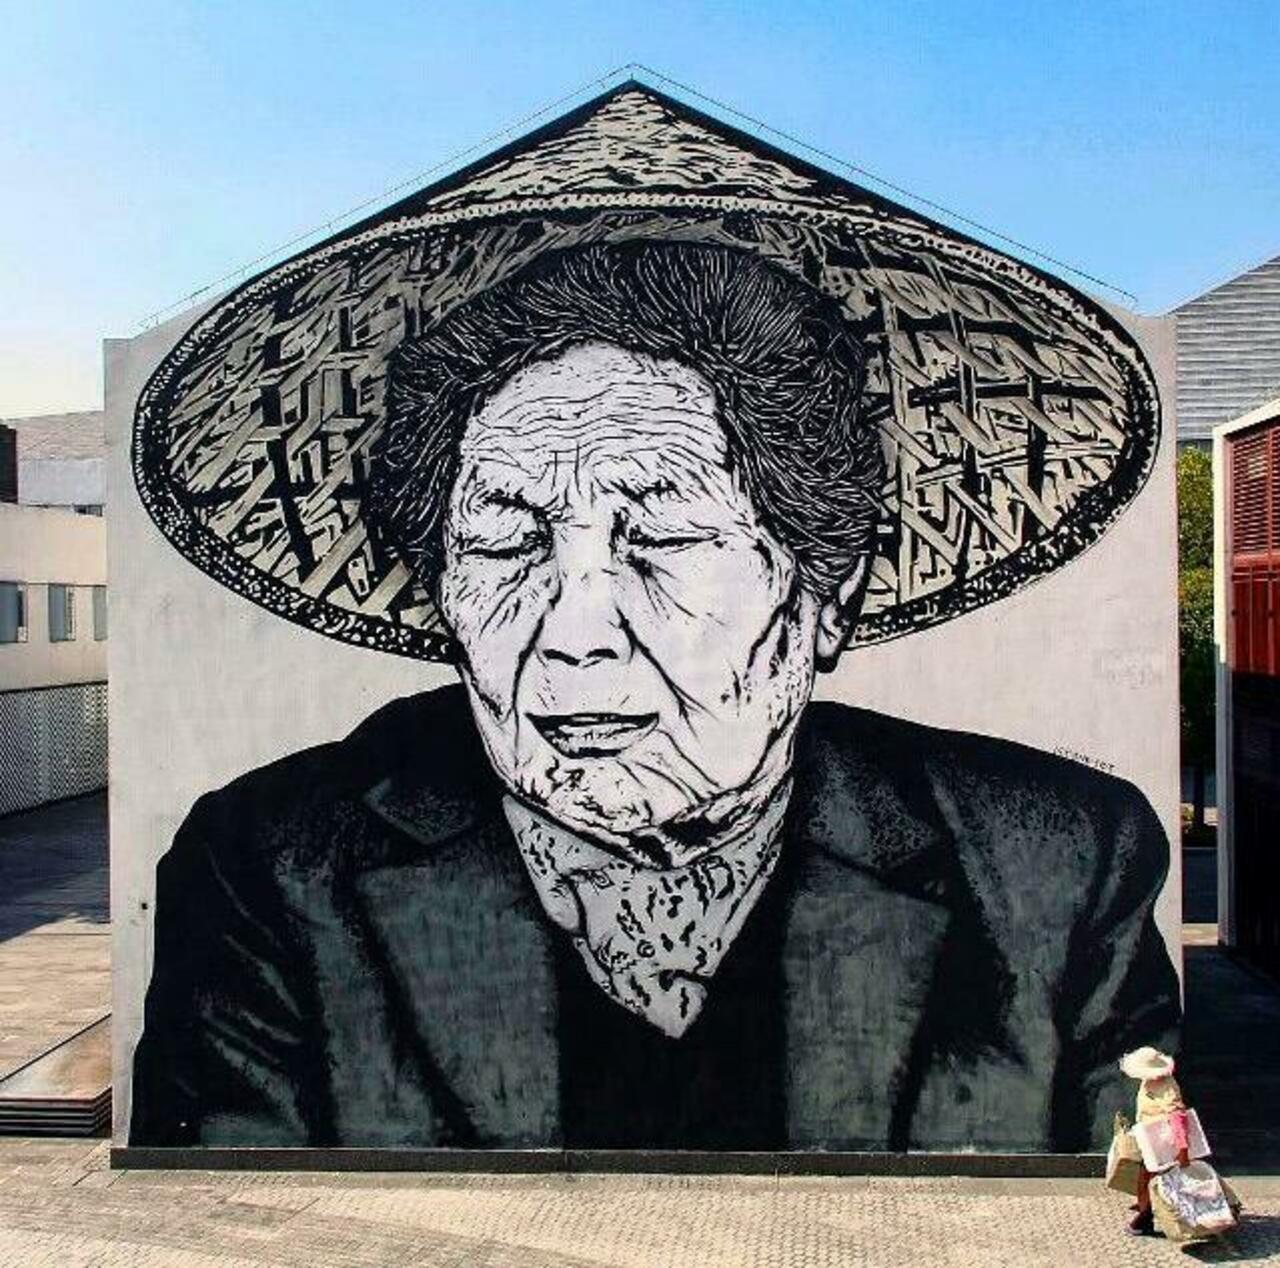 RT @Trxll_Squad: New Street Art by icy&sot in Shanghai  

#art #graffiti #mural #streetart http://t.co/YWmlp0lyHu